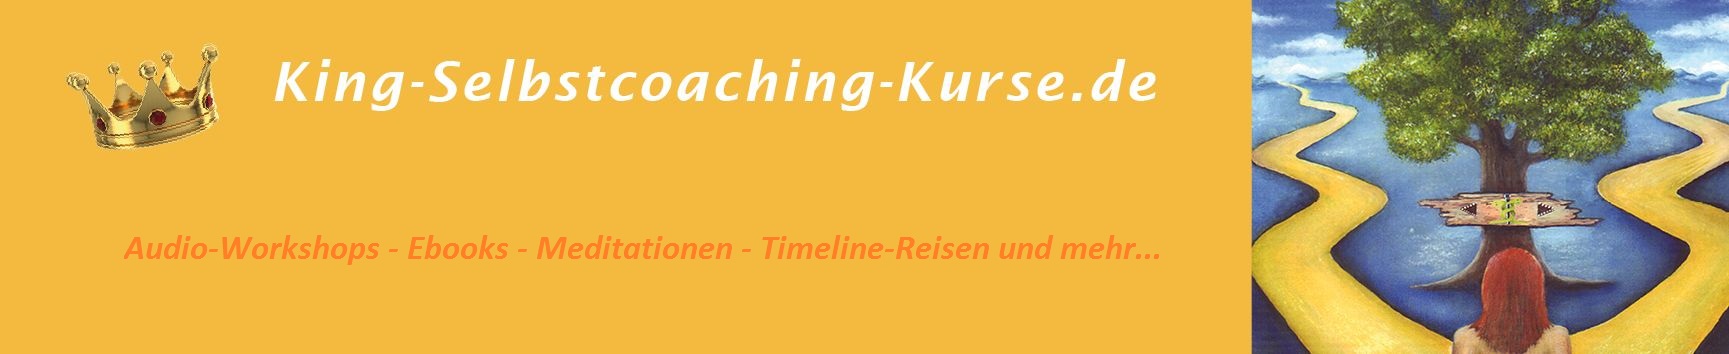 (c) King-selbstcoaching-kurse.de